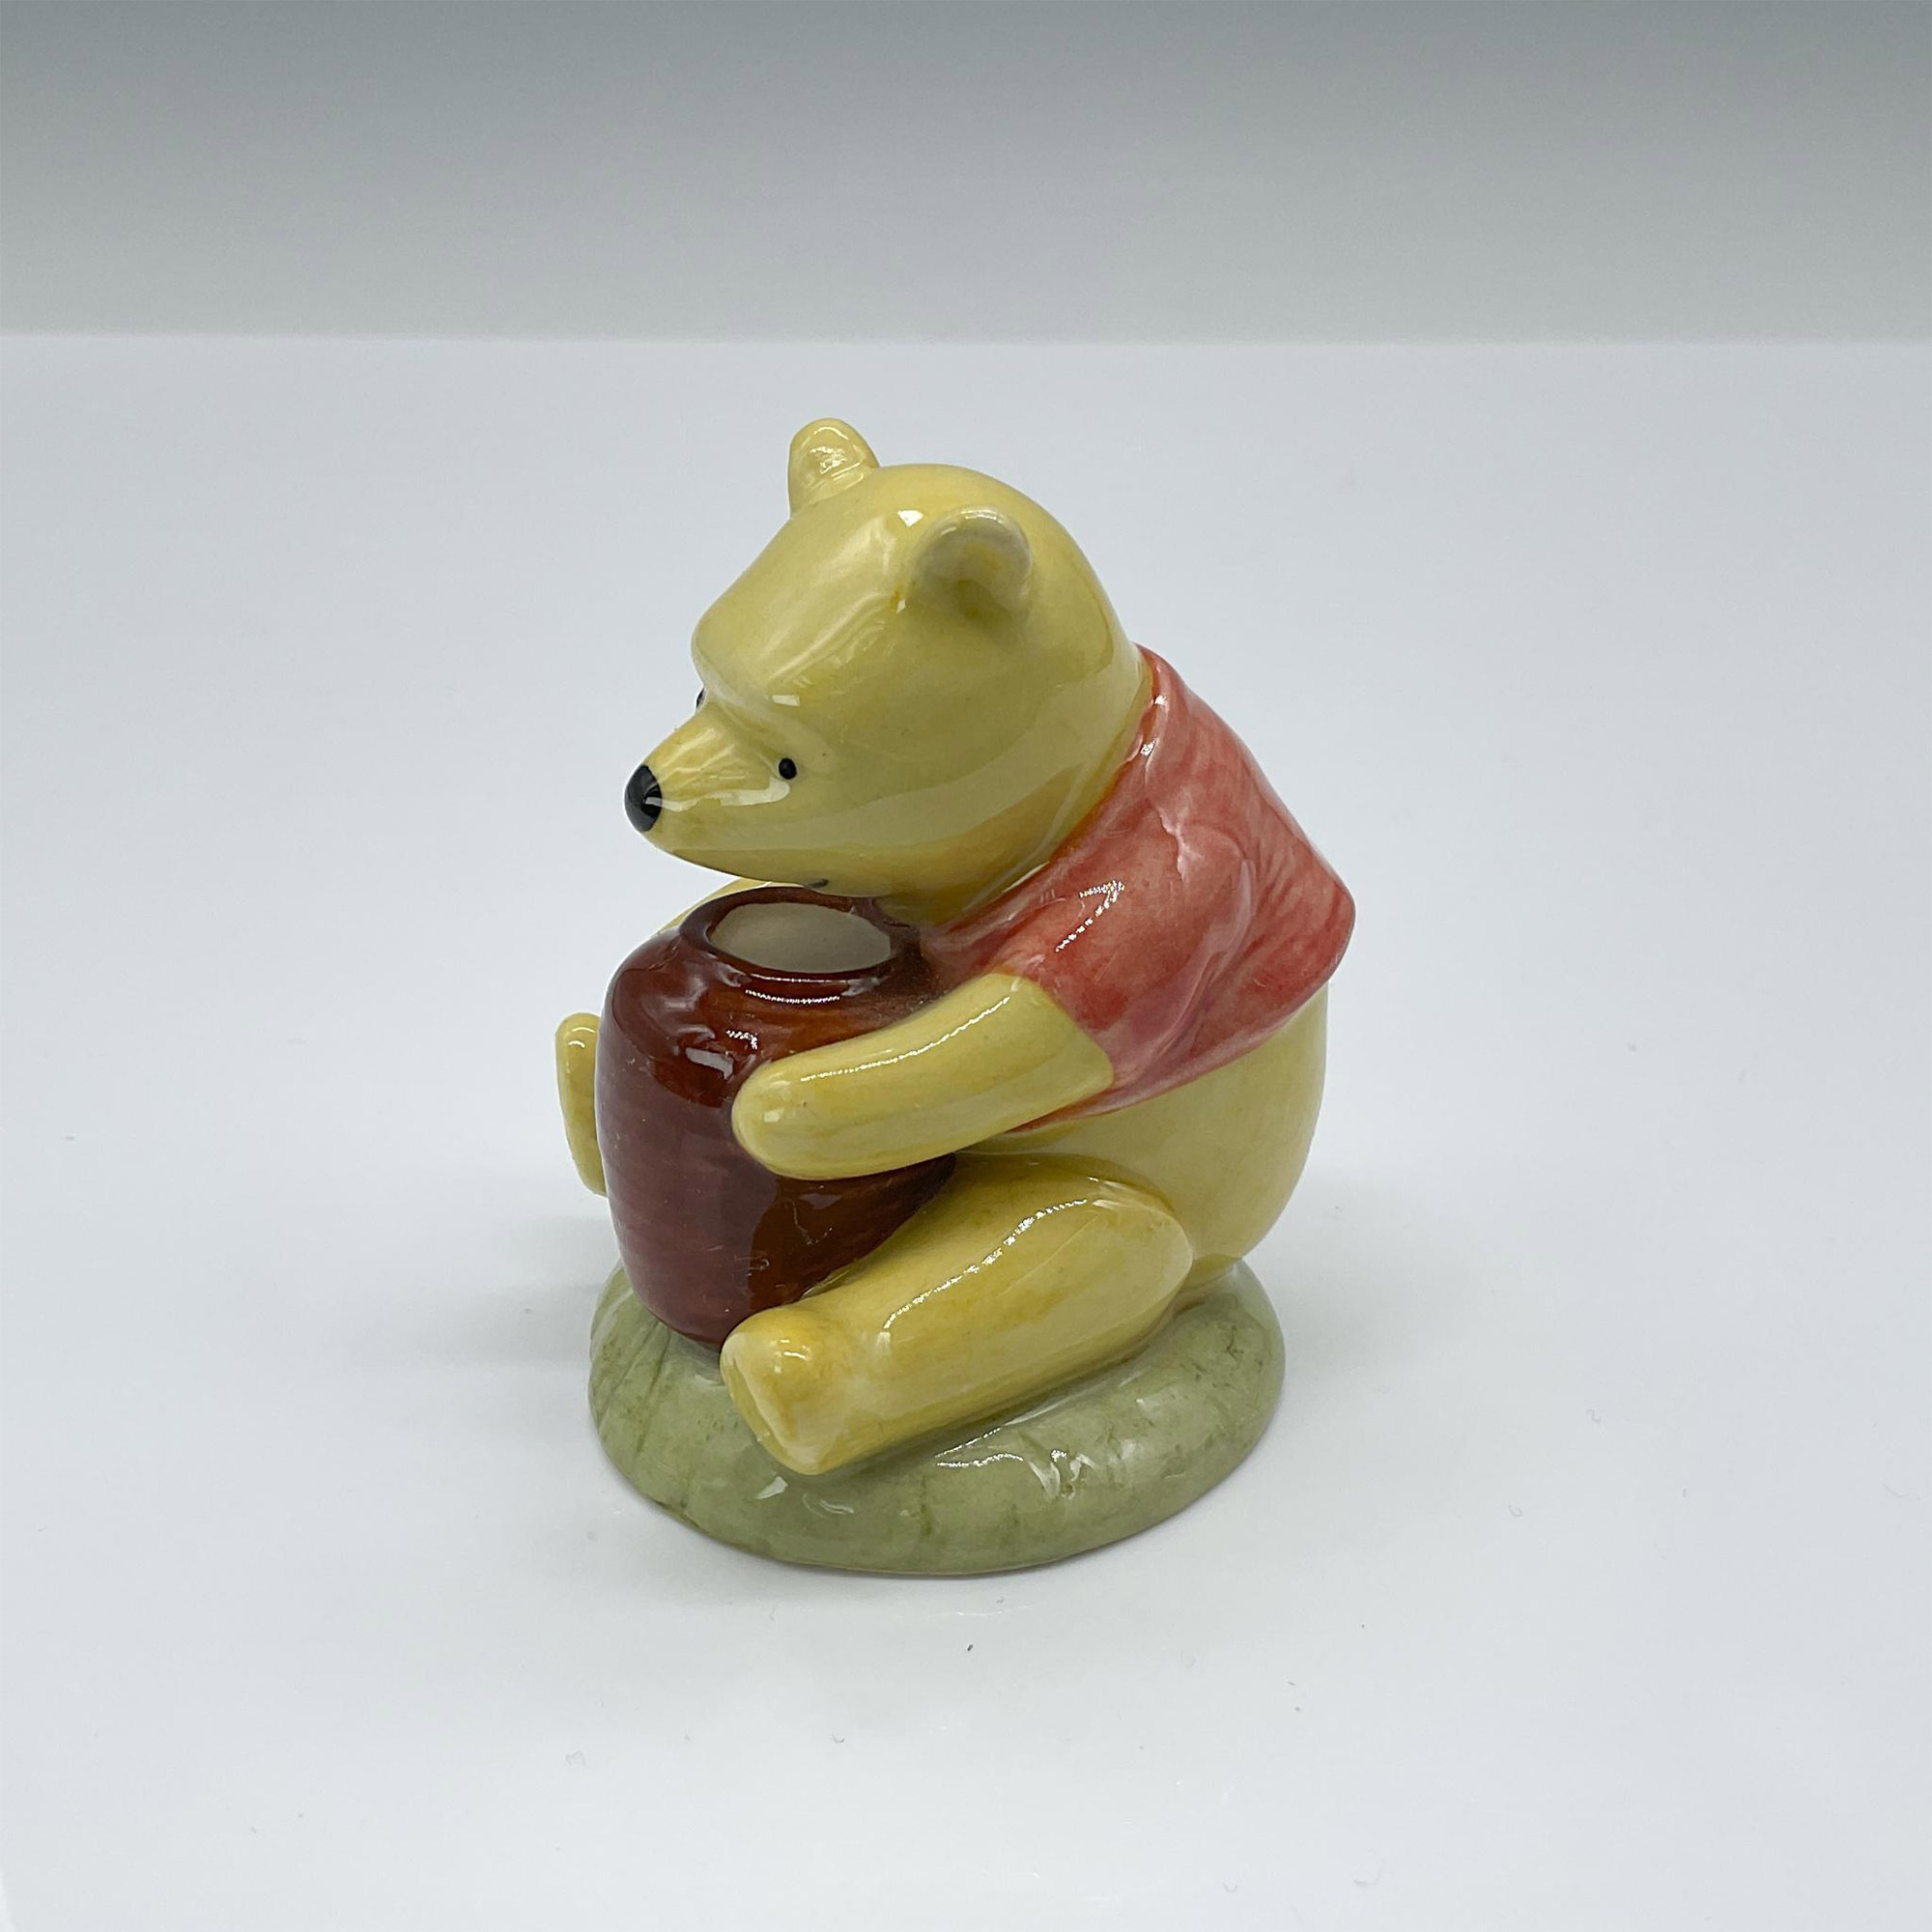 Winnie the Pooh - WP1 - Royal Doulton Walt Disney Figurine - Image 2 of 3